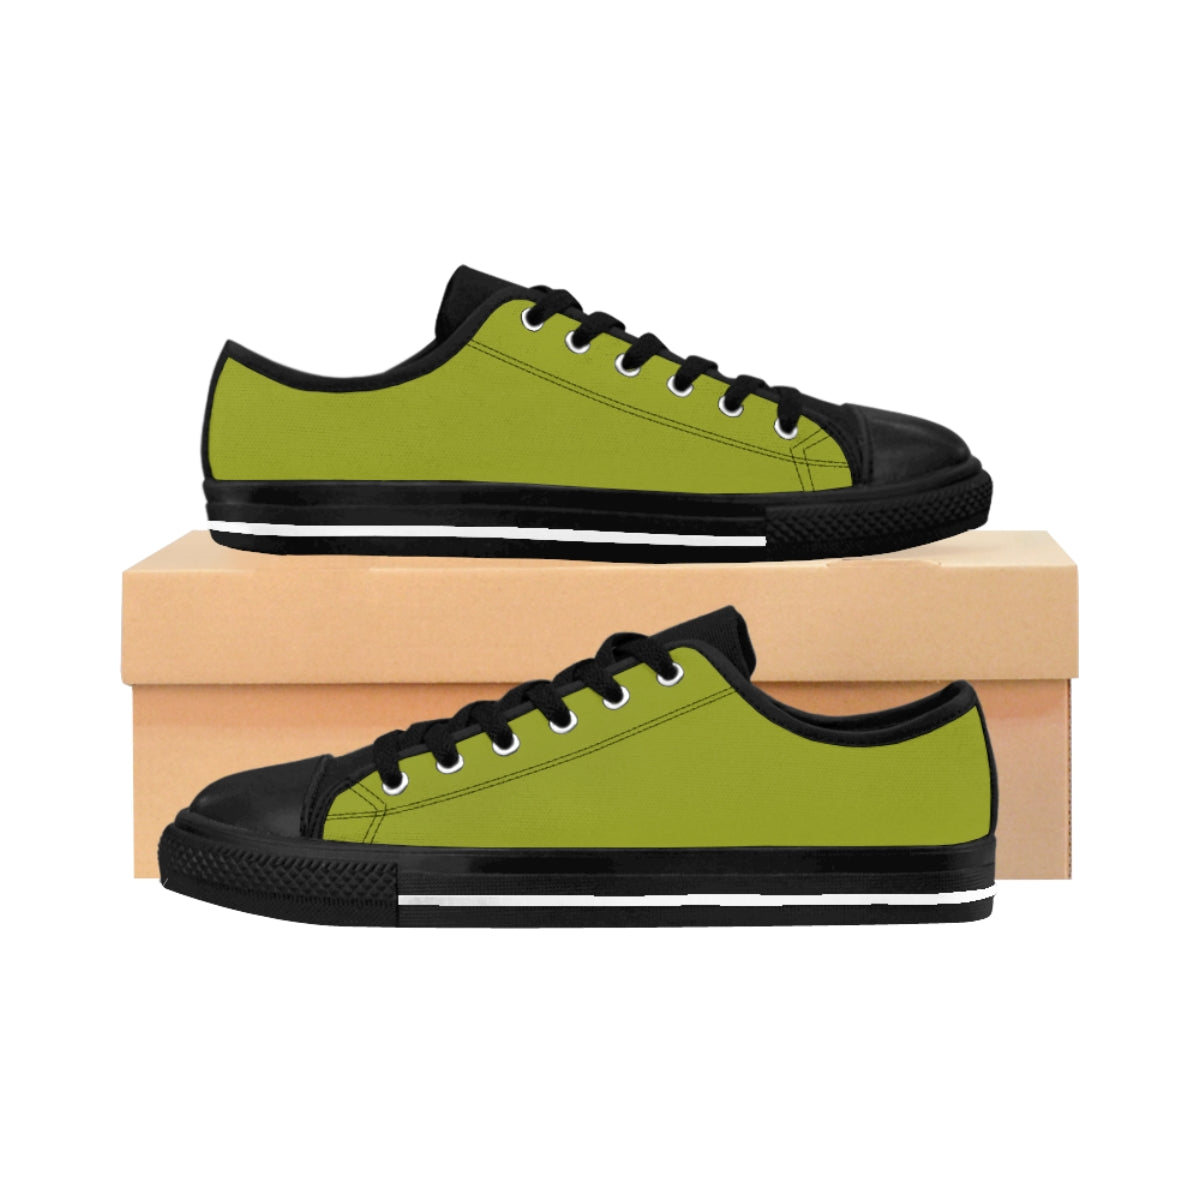 Lime Women's Sneakers